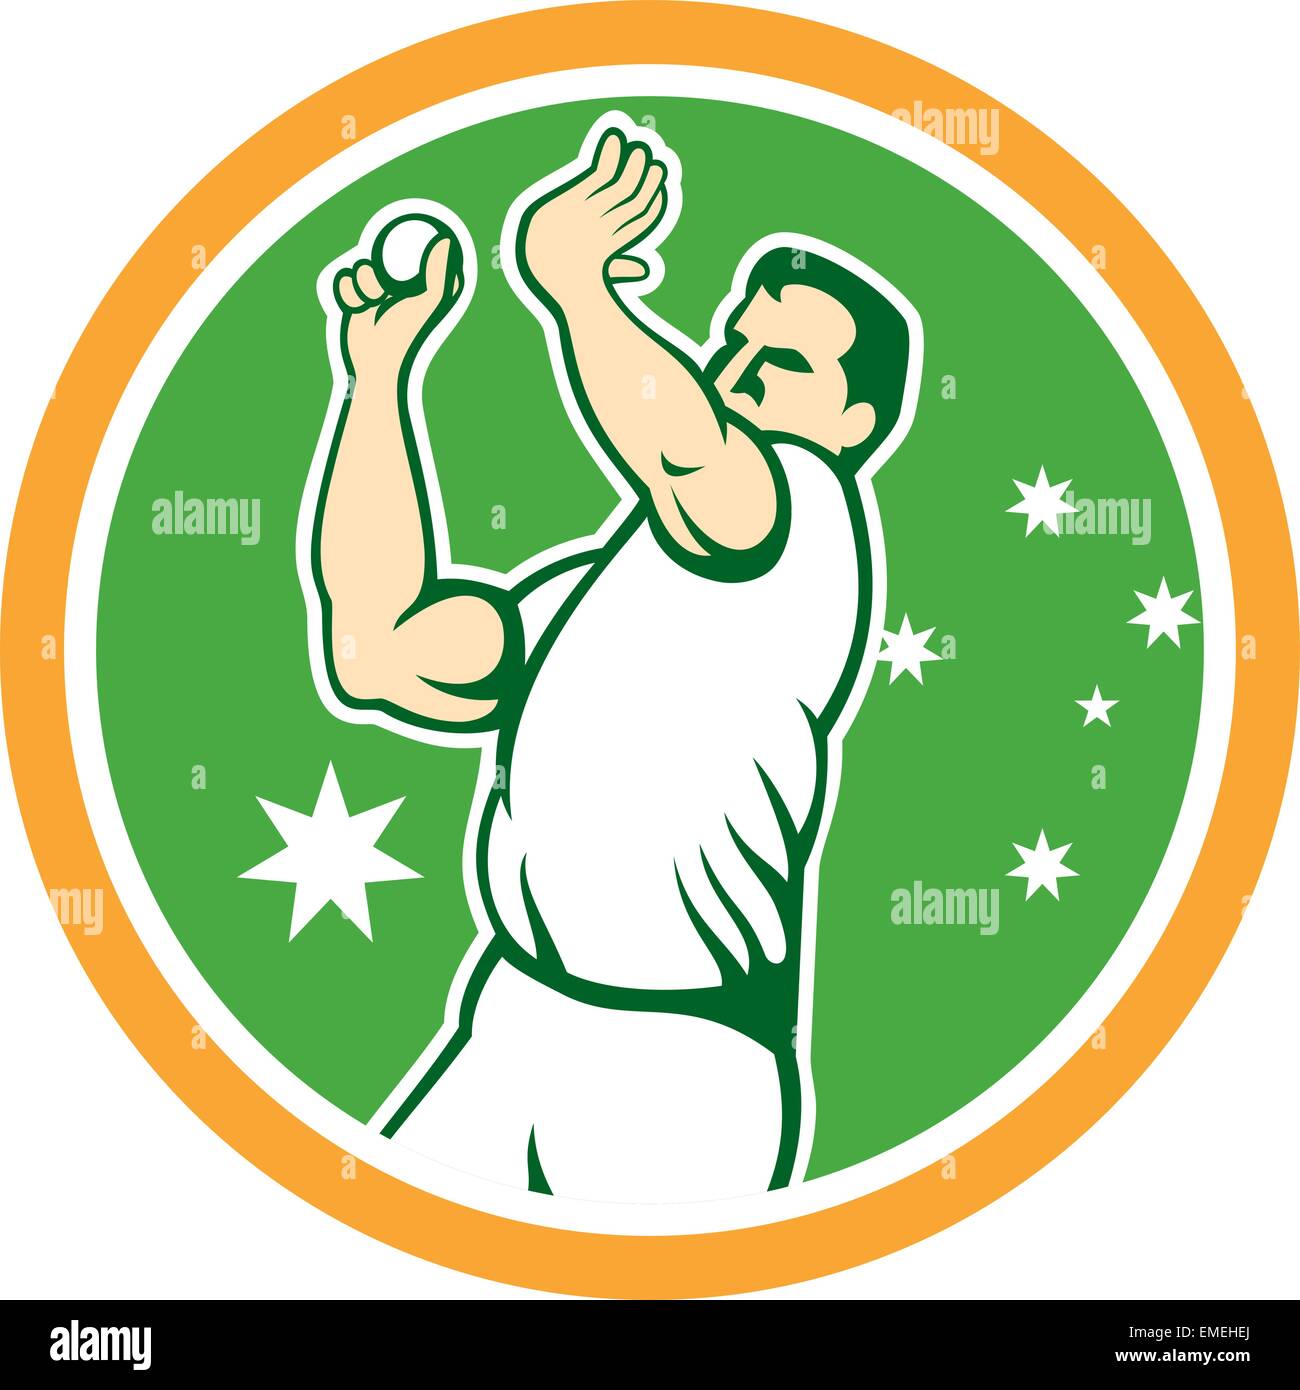 Australian Cricket Fast Bowler Bowling Ball Circle Cartoon Stock Vector